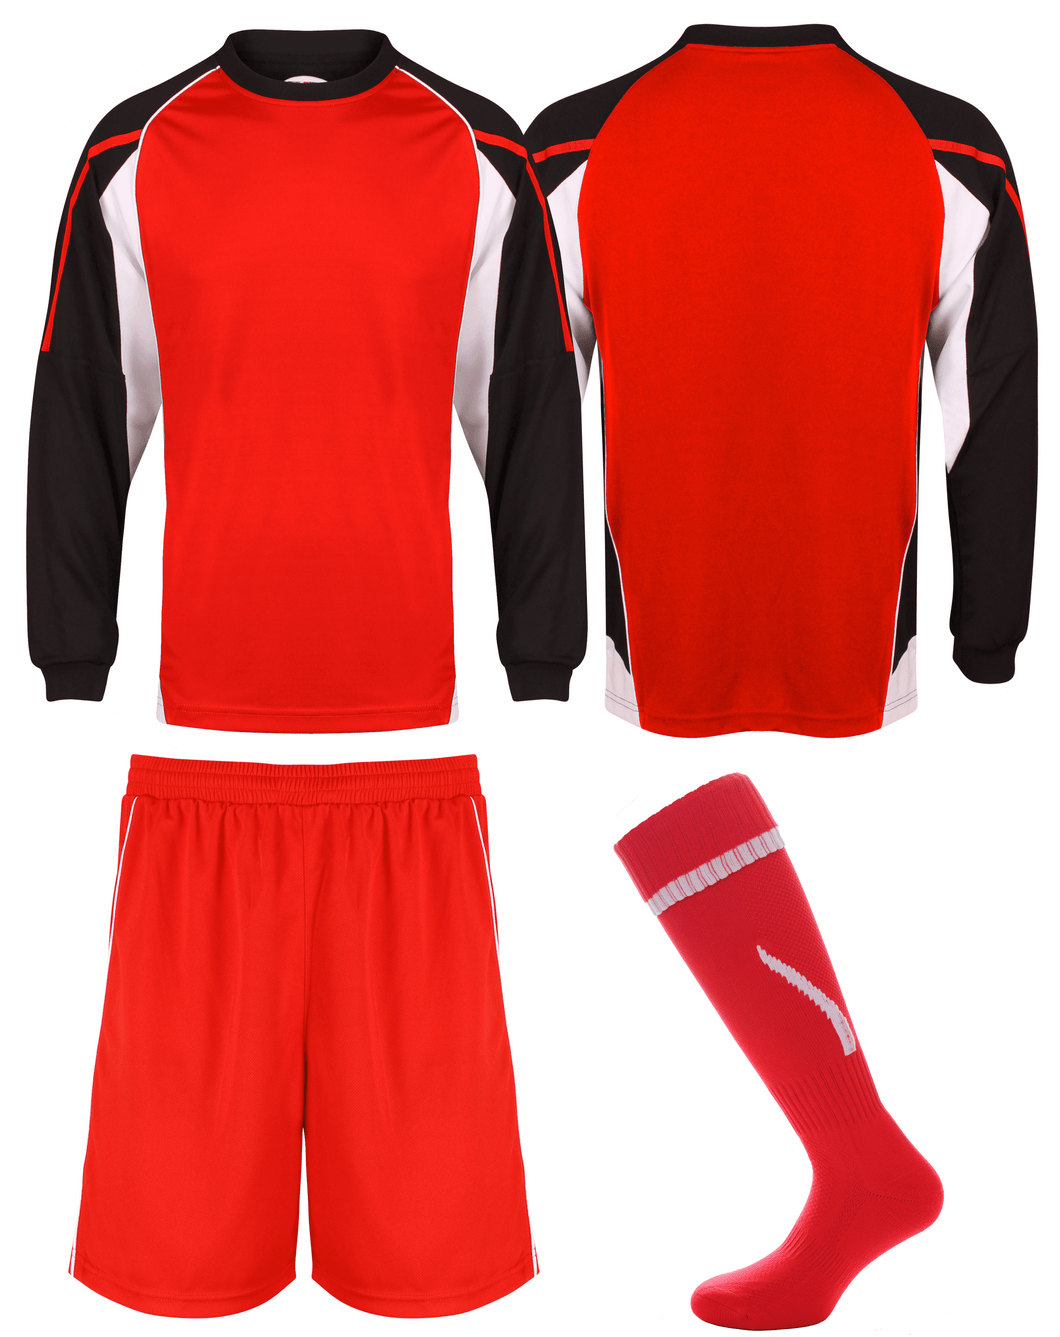 Adults Teamstar Long Sleeve Full Kit Gazelle Sports UK XS Black/Red/White Yes